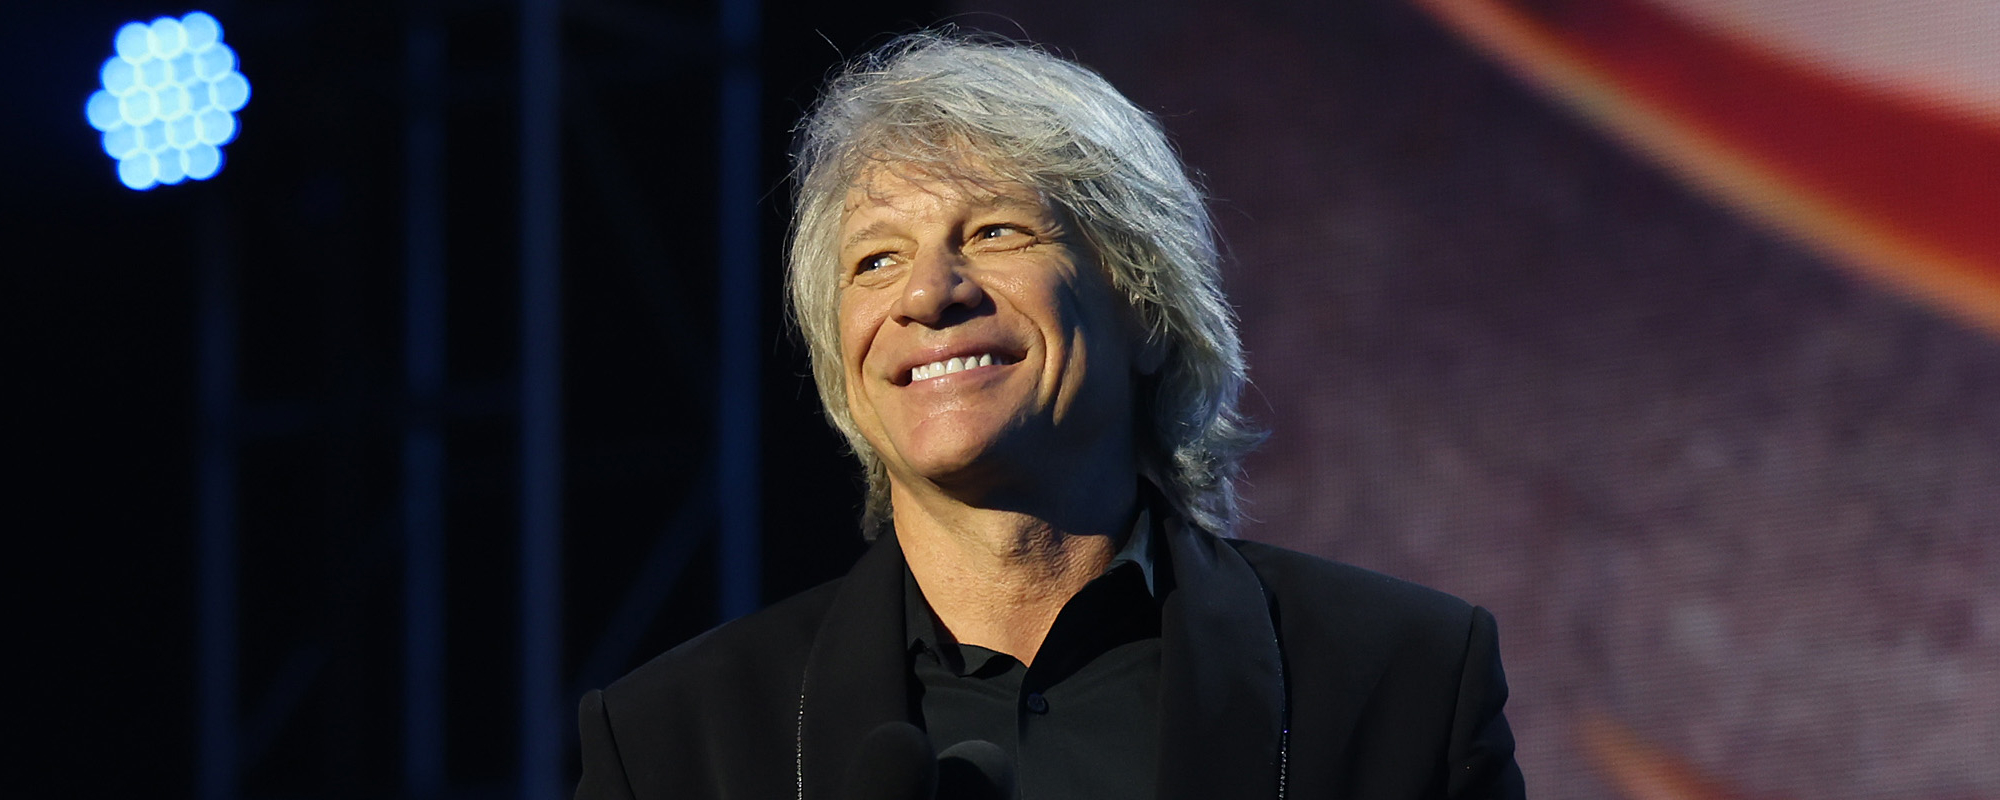 Jon Bon Jovi Reveals His Uncertainty Surrounding Touring Again After ”Major Surgery”